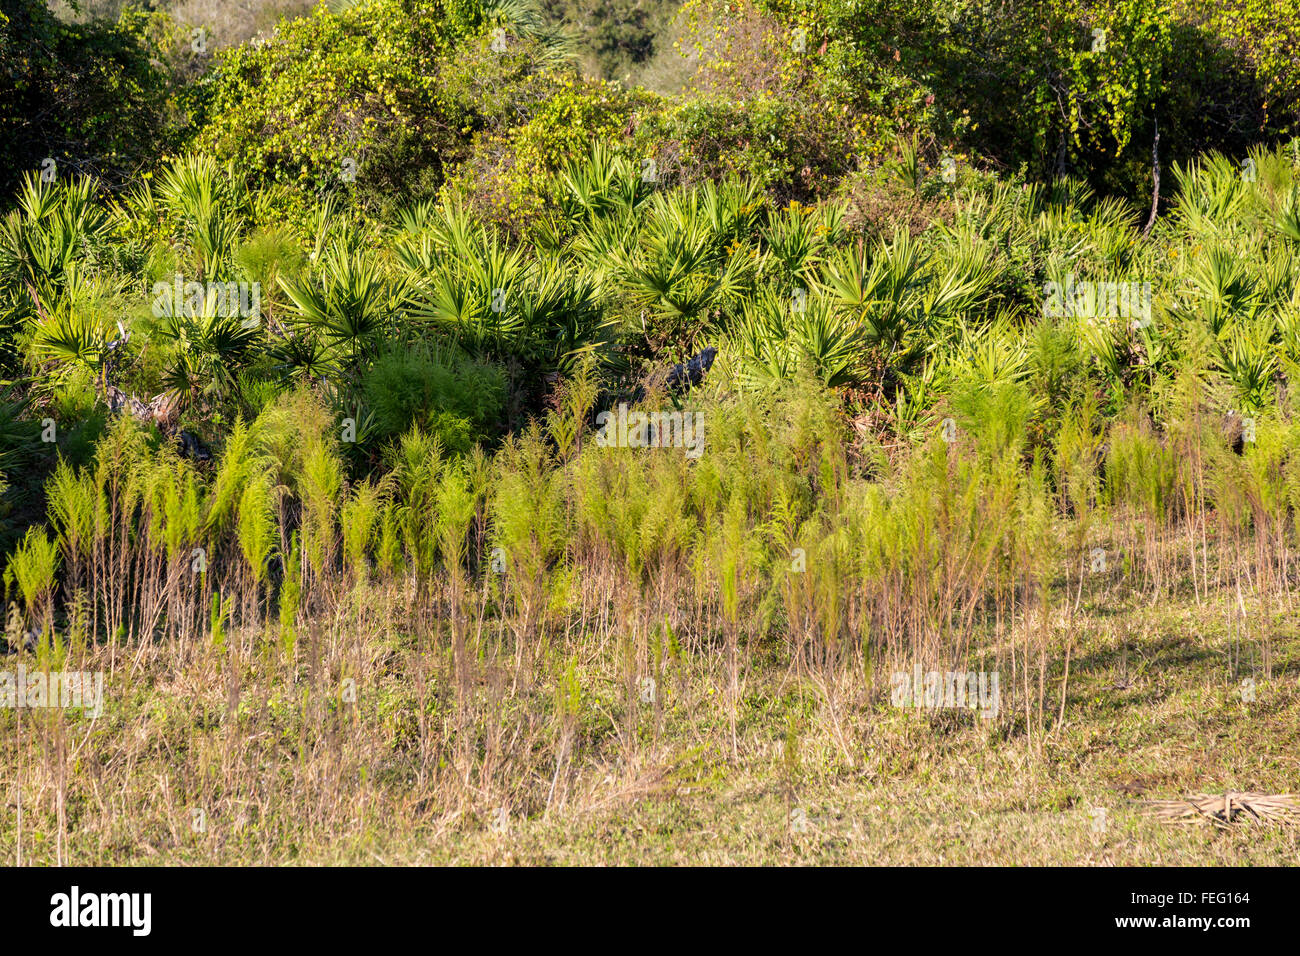 Dog Fennel (Eupatorium Capillifolium) in Foreground, southern Florida. Stock Photo